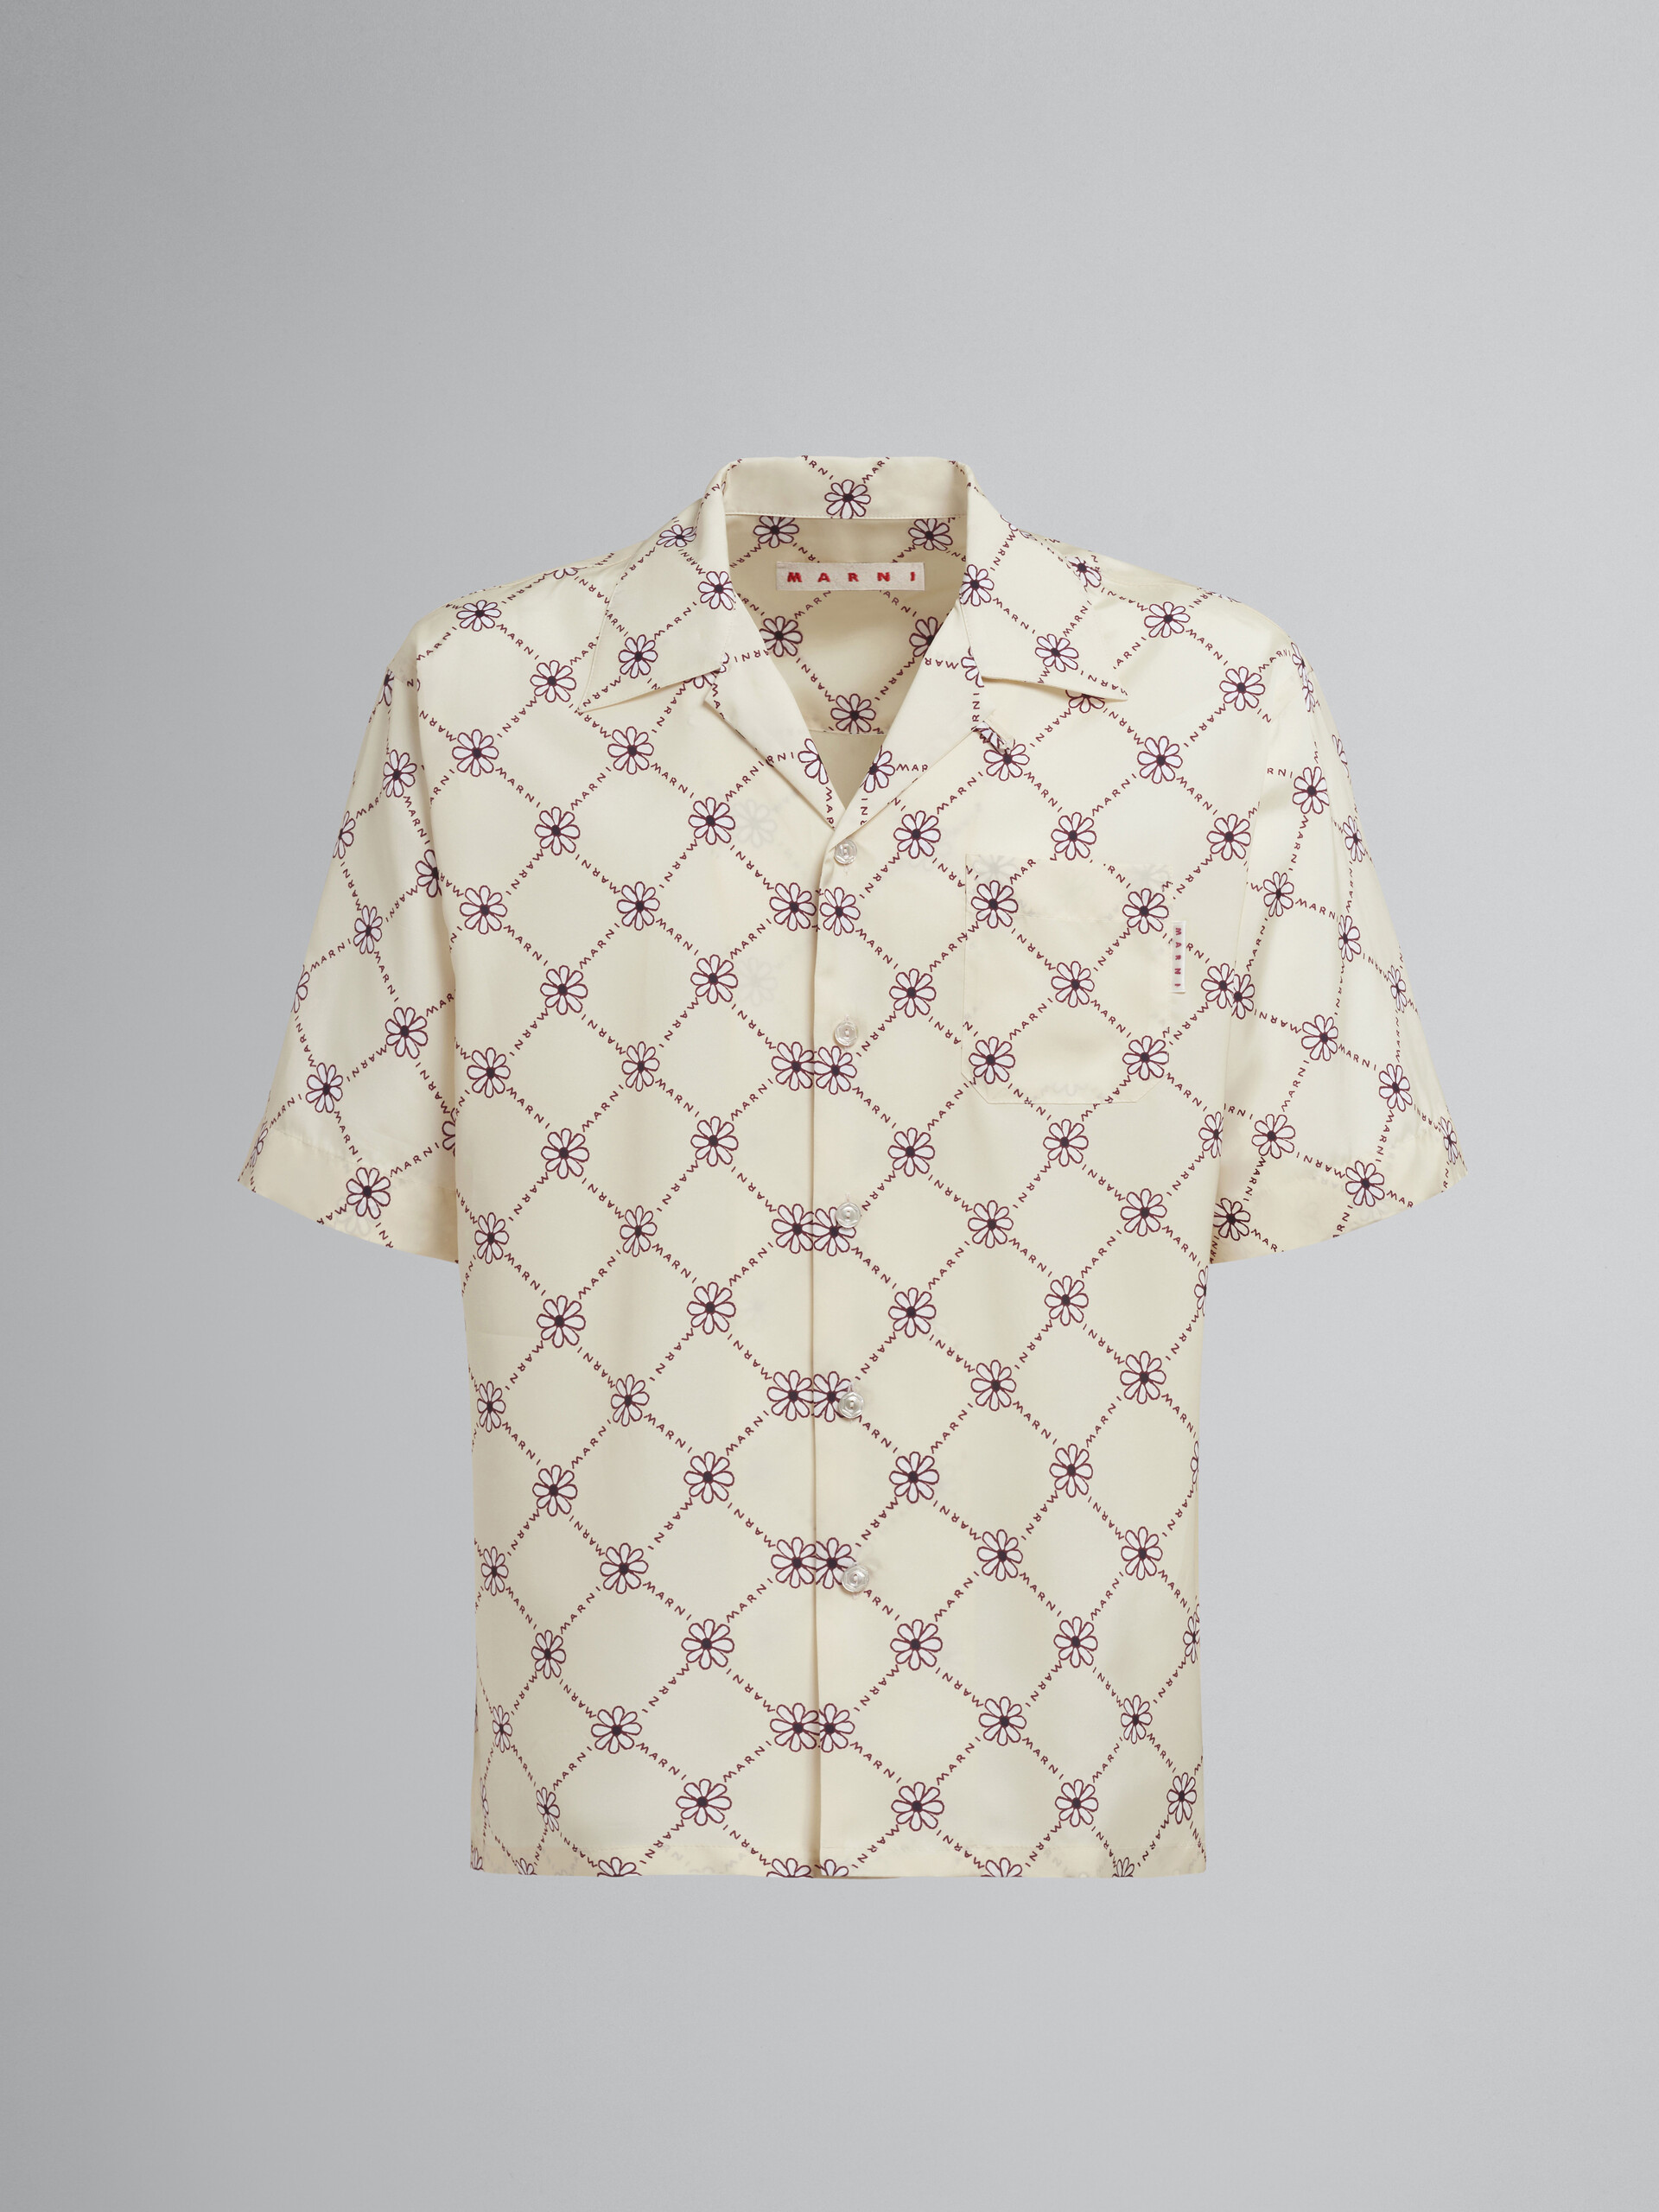 Marnigramプリント ホワイトビスコー地ボーリングシャツ - シャツ - Image 1